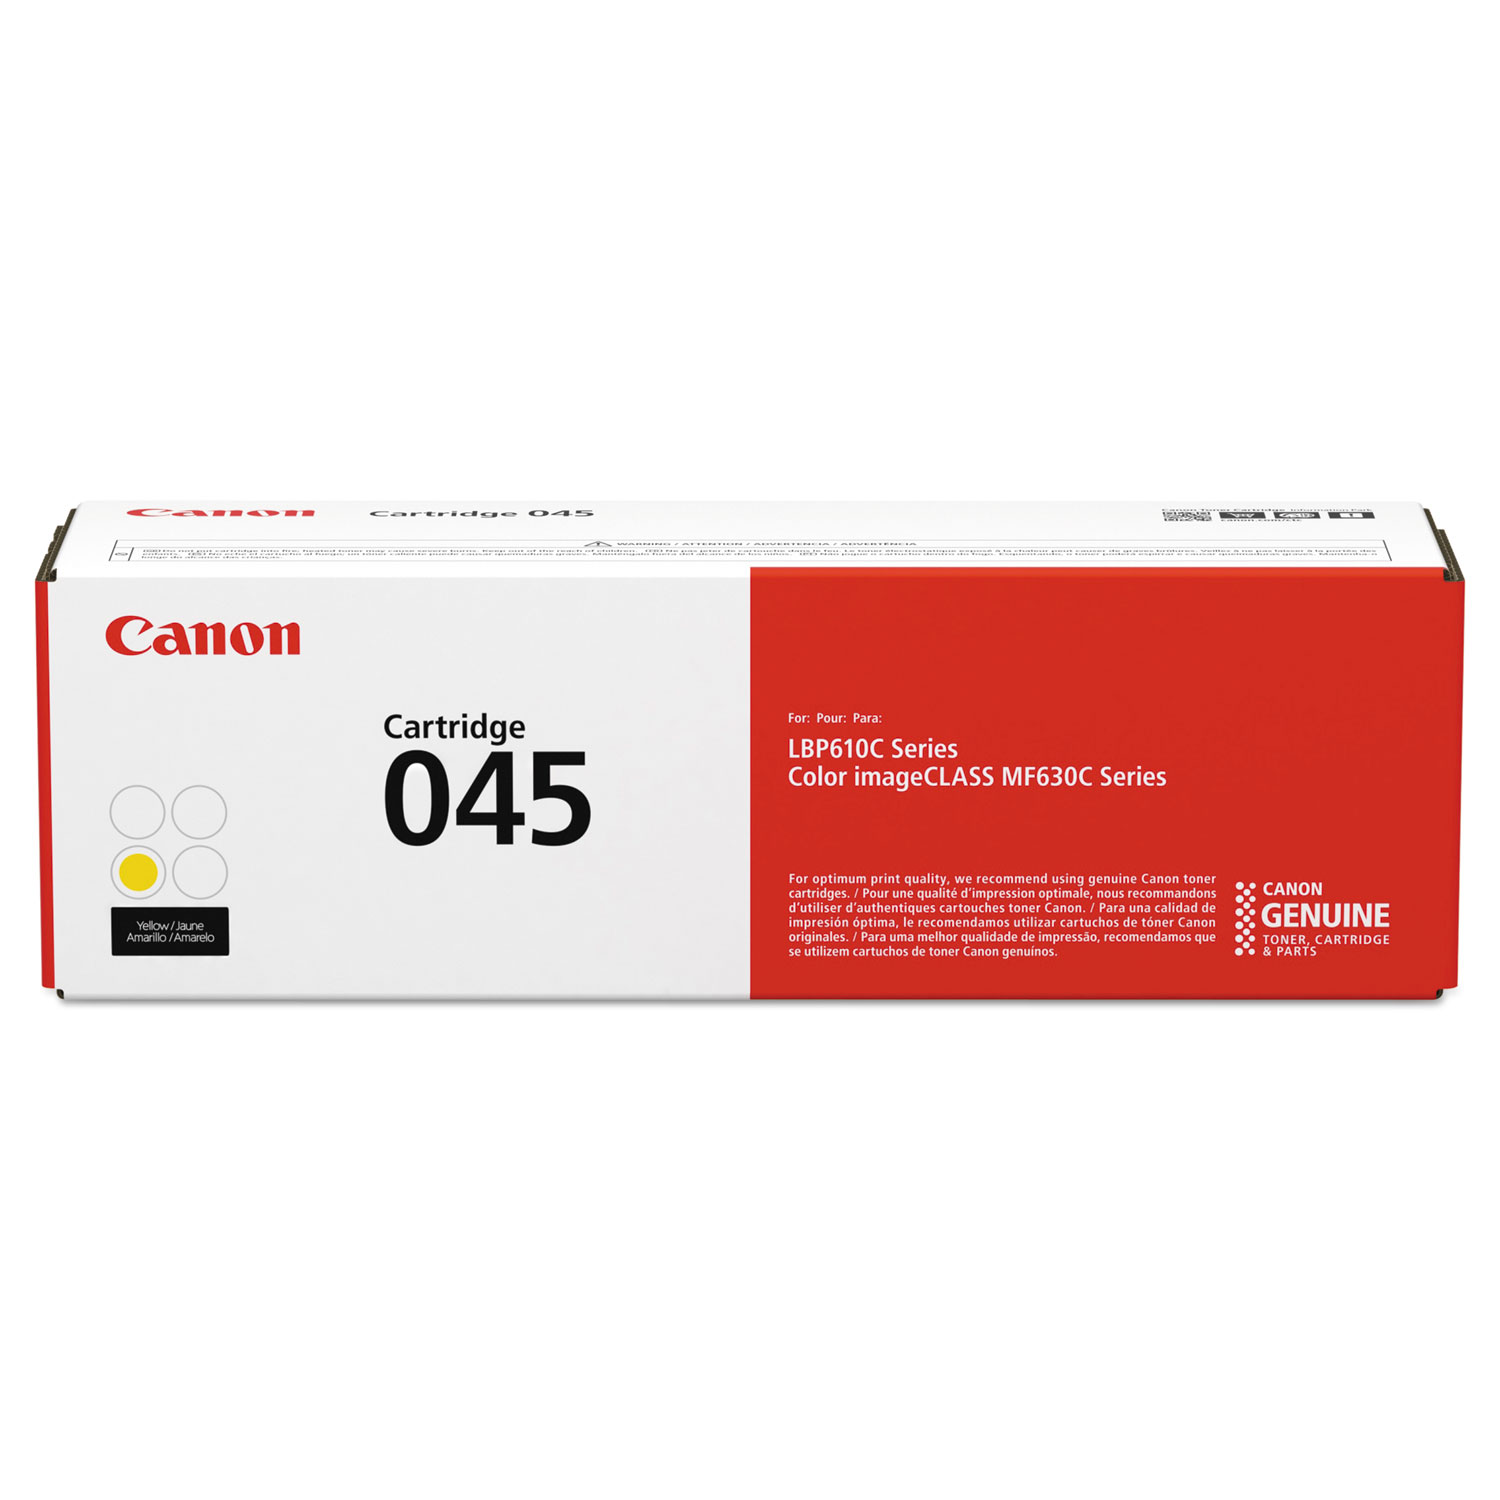  Canon 1239C001 1239C001 (045) Toner, 1300 Page-Yield, Yellow (CNM1239C001) 